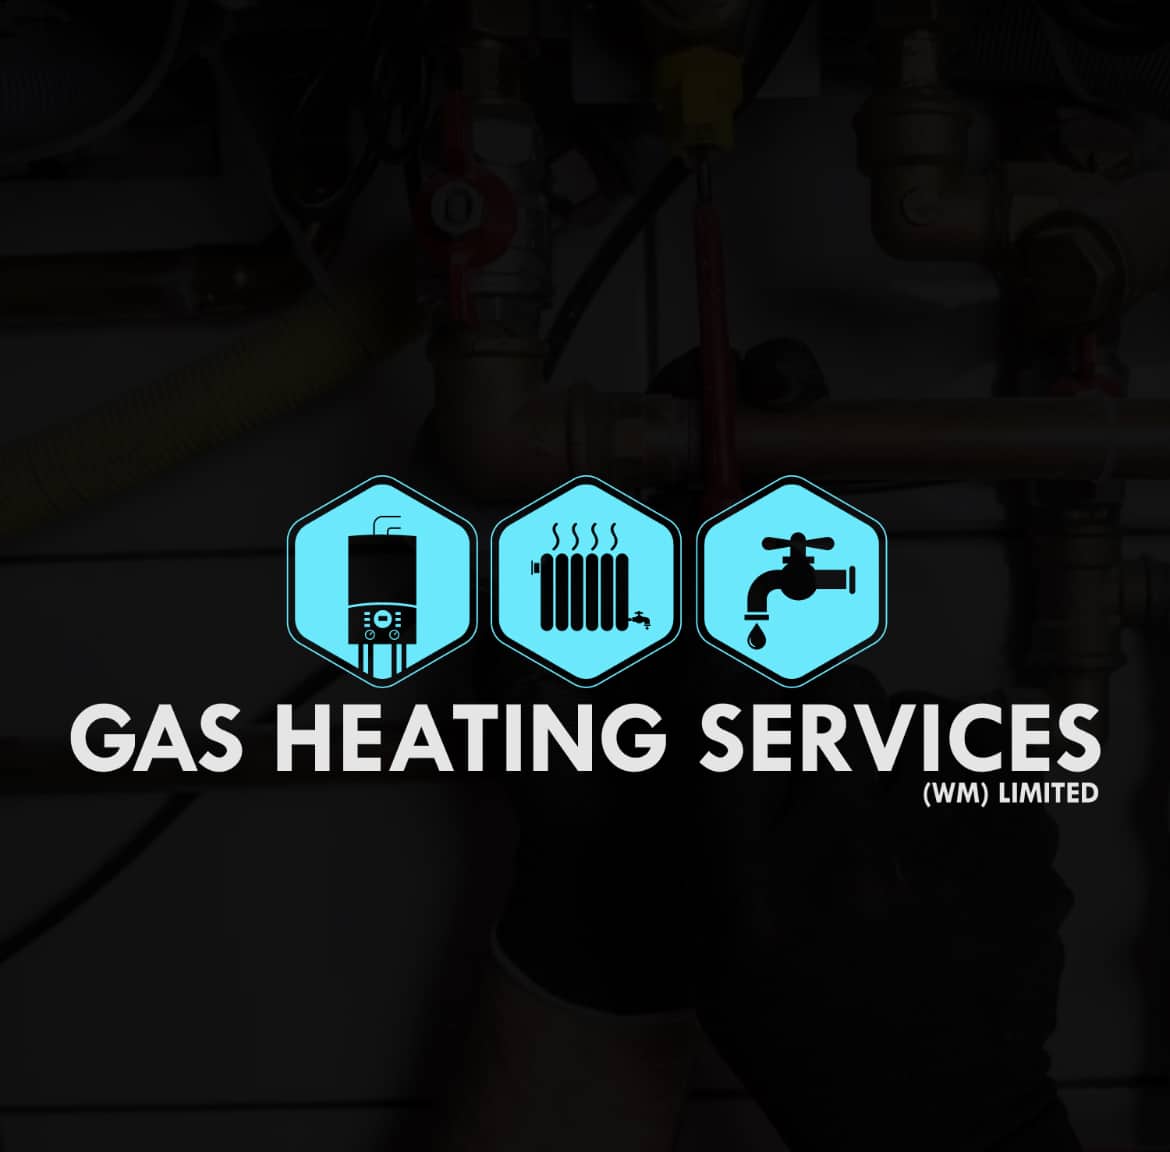 Gas Heating Services, based in Halesowen